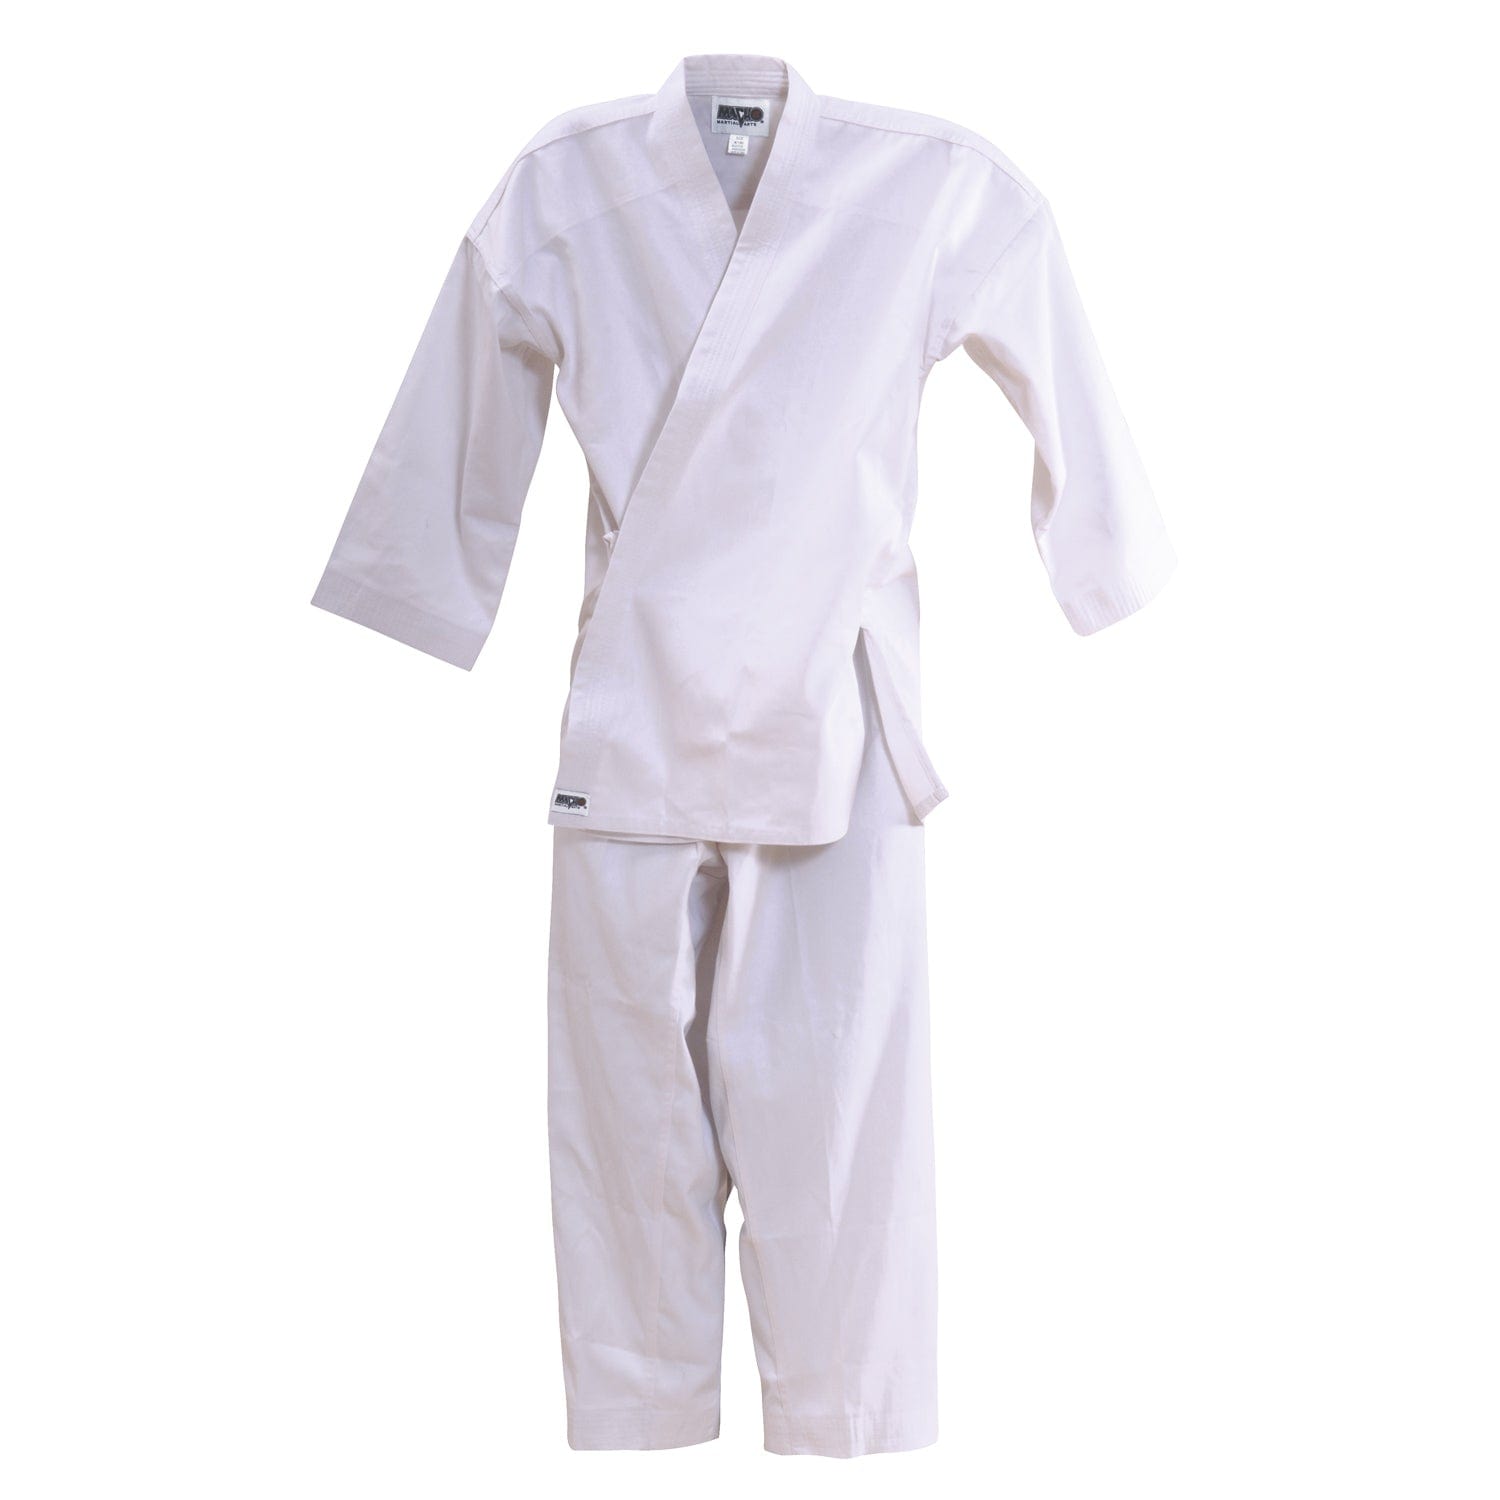 Macho sporting goods white / 0000 MACHO 7OZ STUDENT UNIFORM Karate Martial Arts